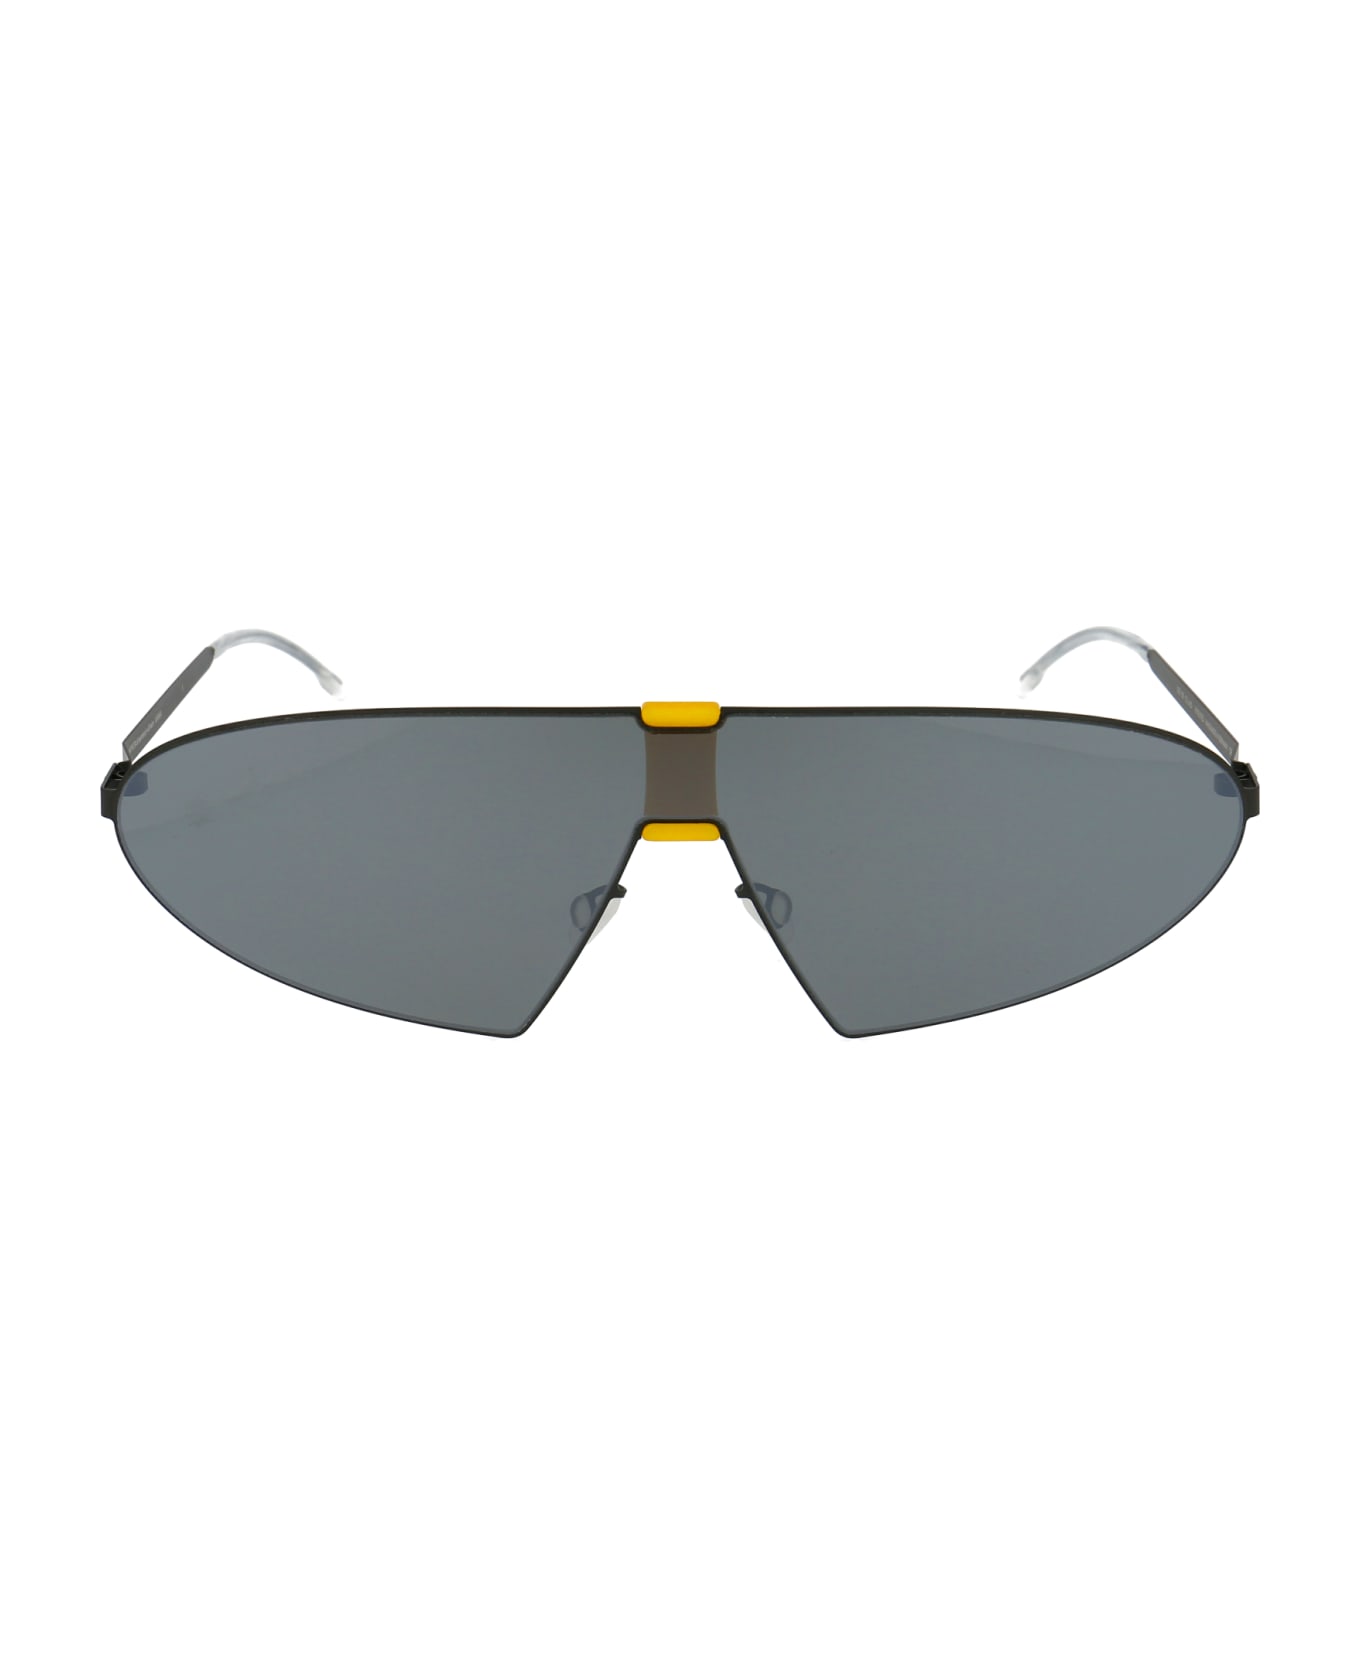 Mykita Karma Sunglasses - 423 MH40 Black/Yellow Silver Shield